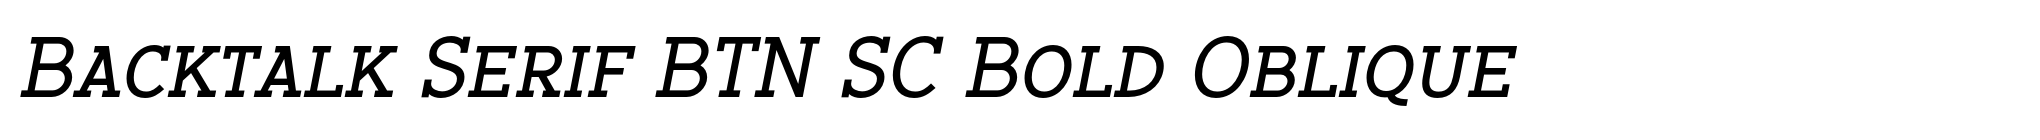 Backtalk Serif BTN SC Bold Oblique image